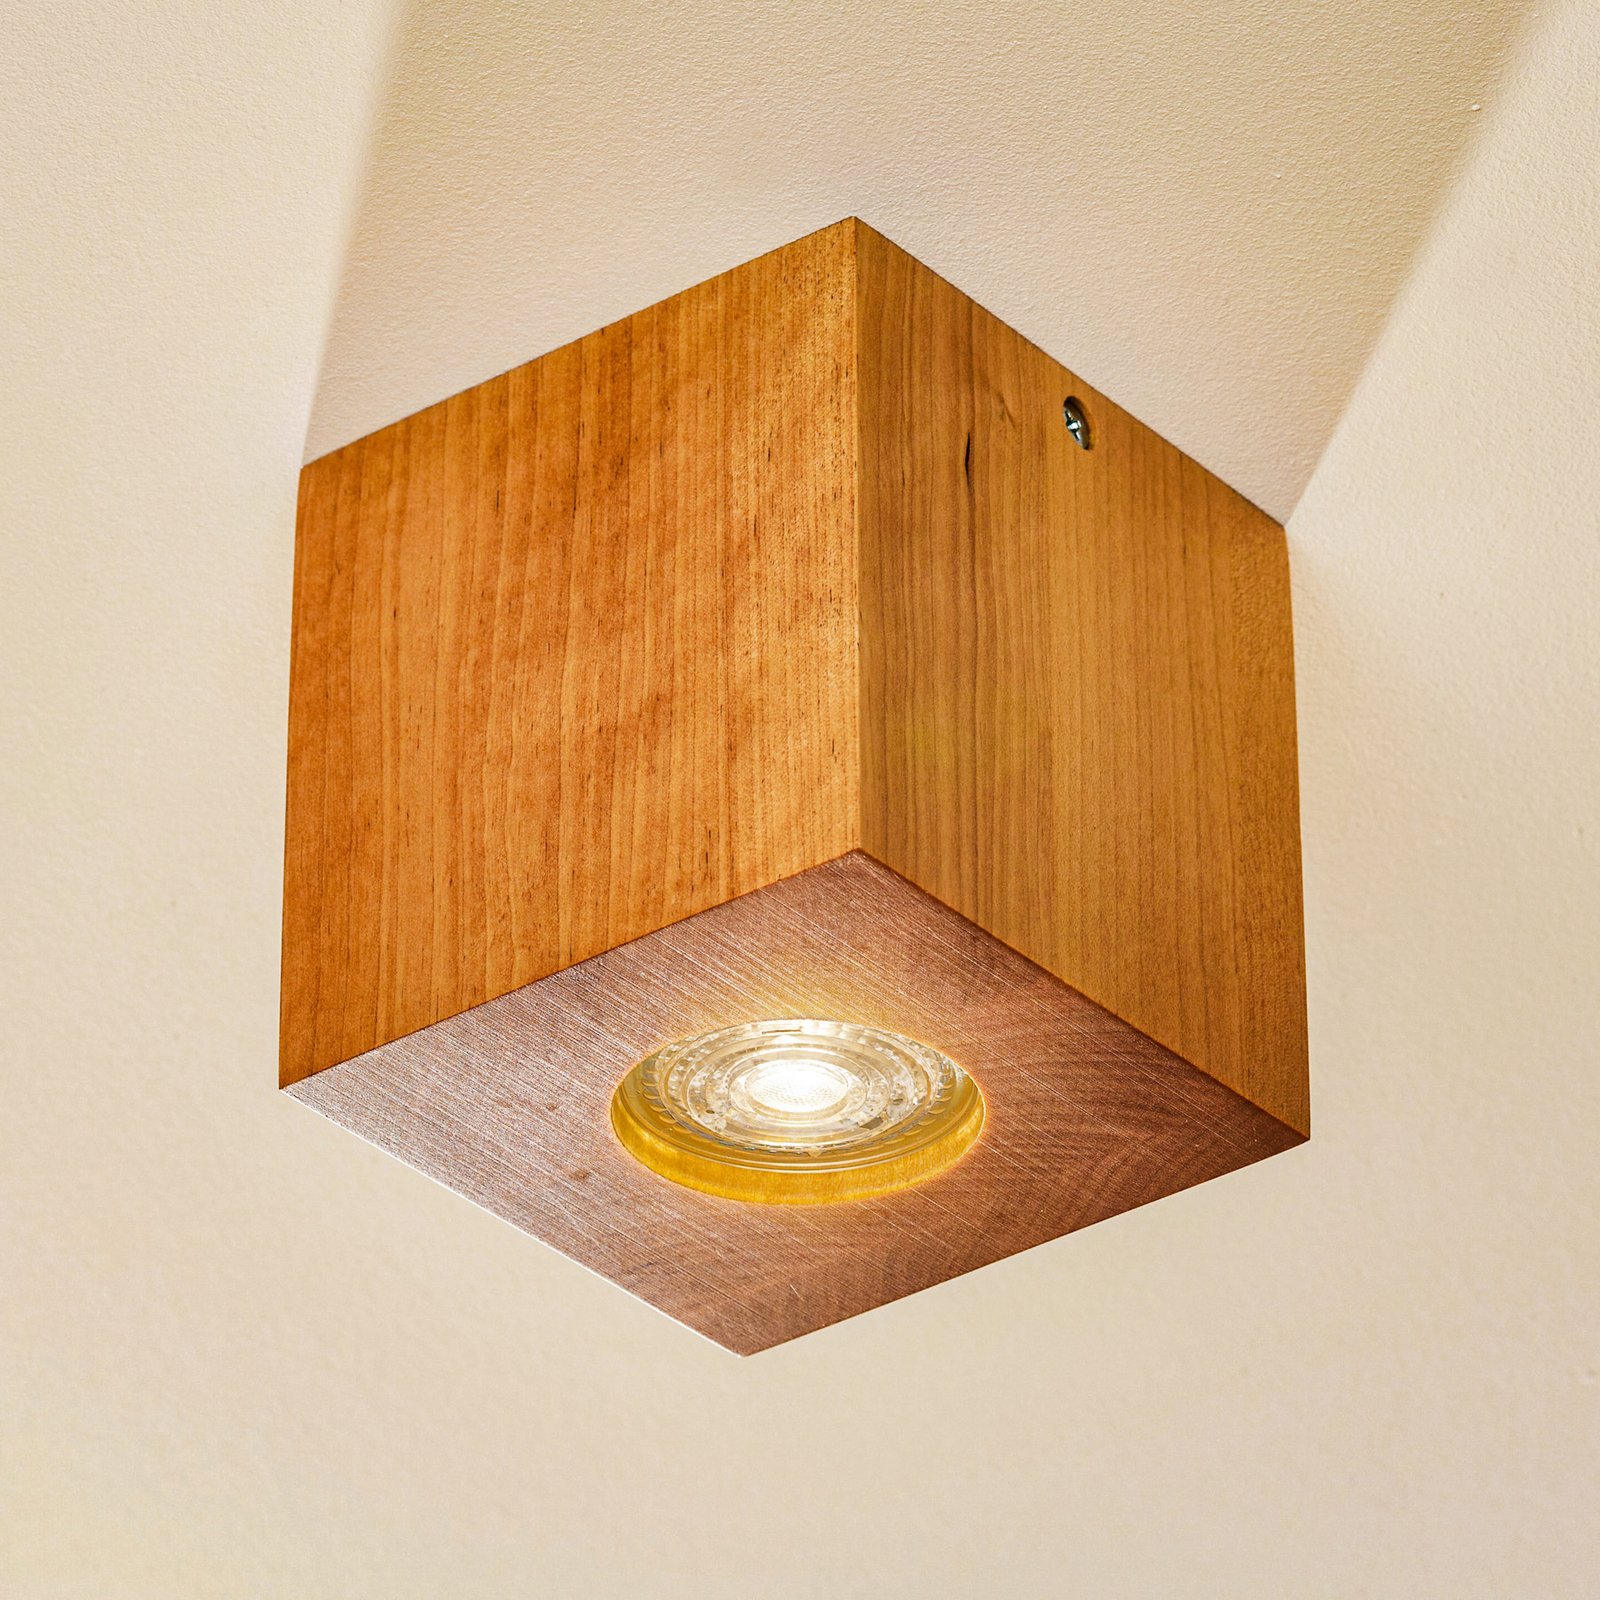 Ara ceiling light as a wooden cube